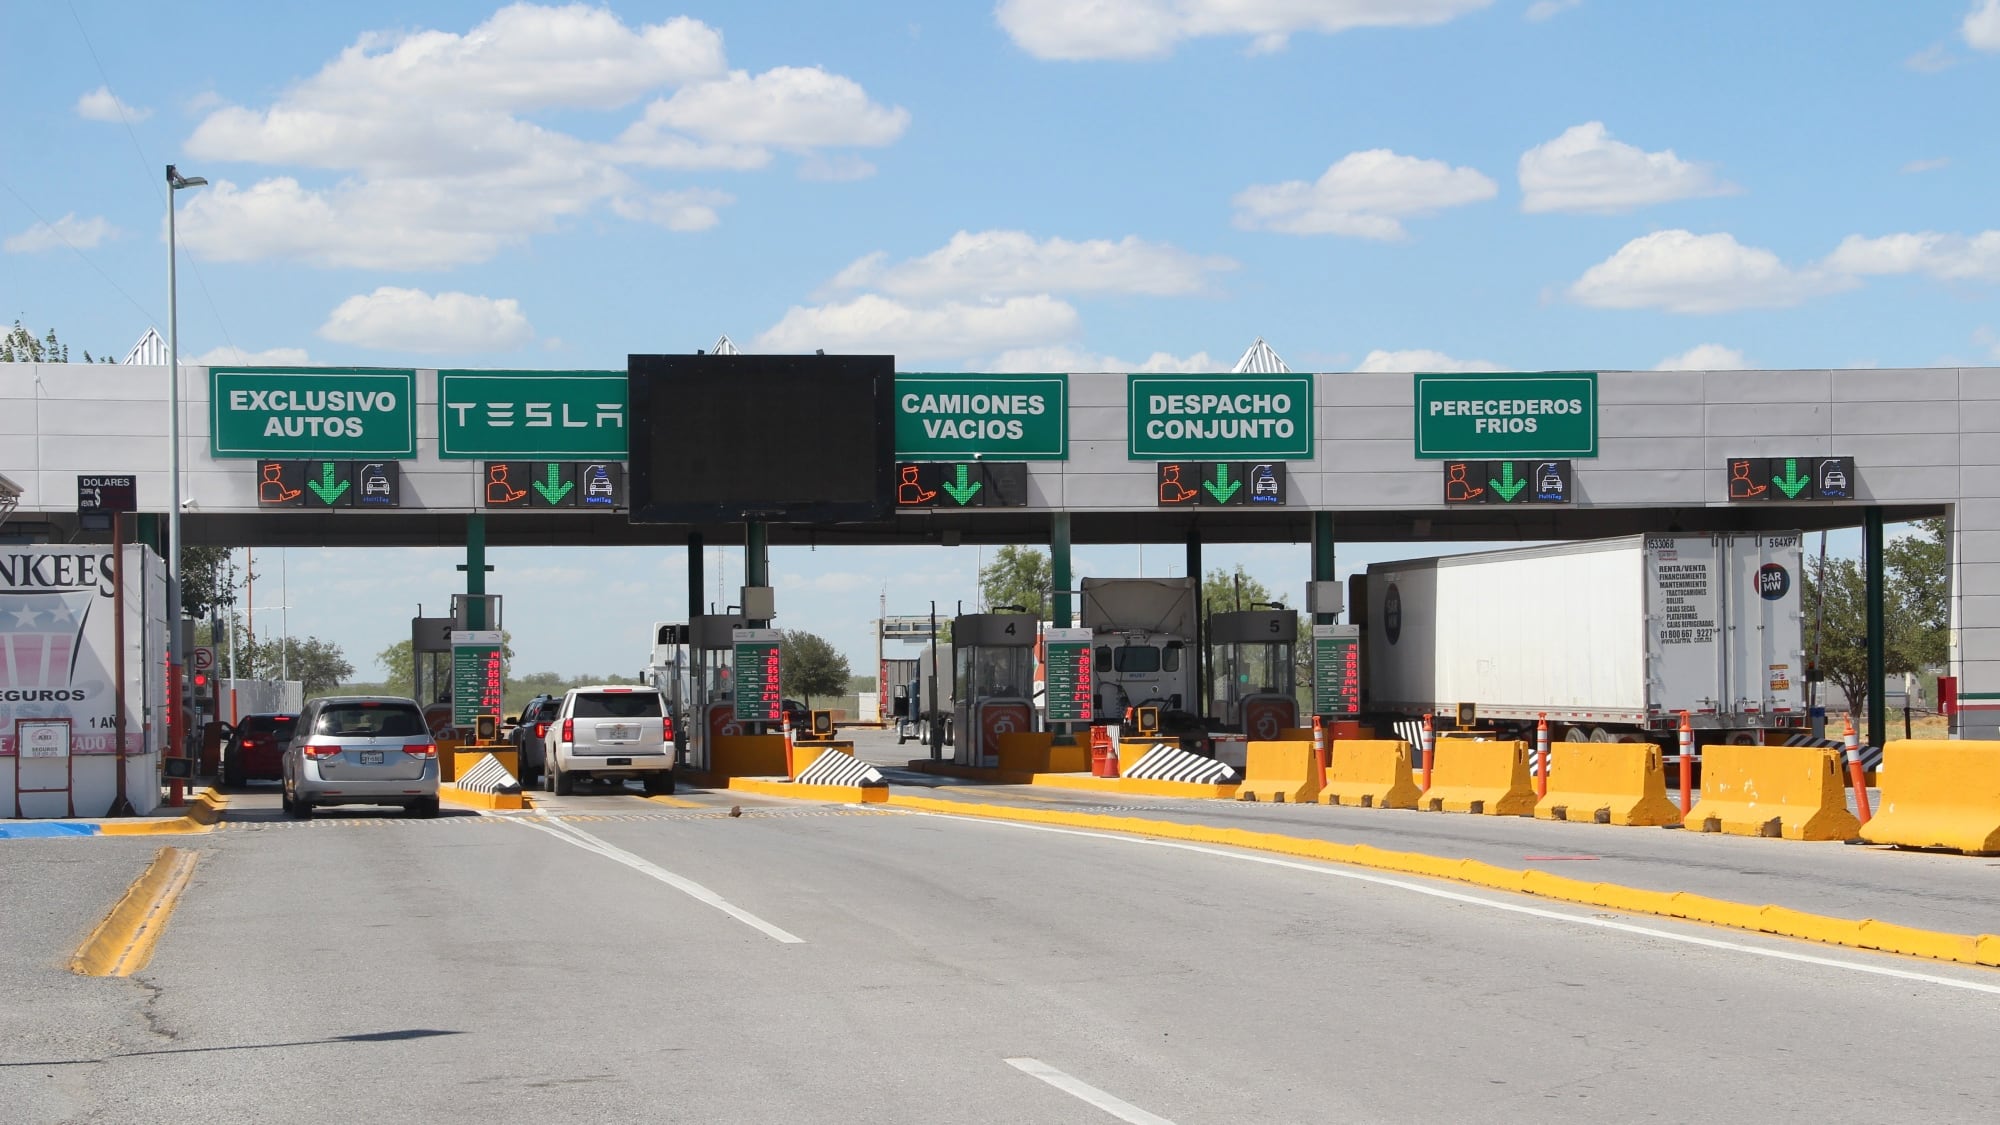 Tesla gets a dedicated lane at the border